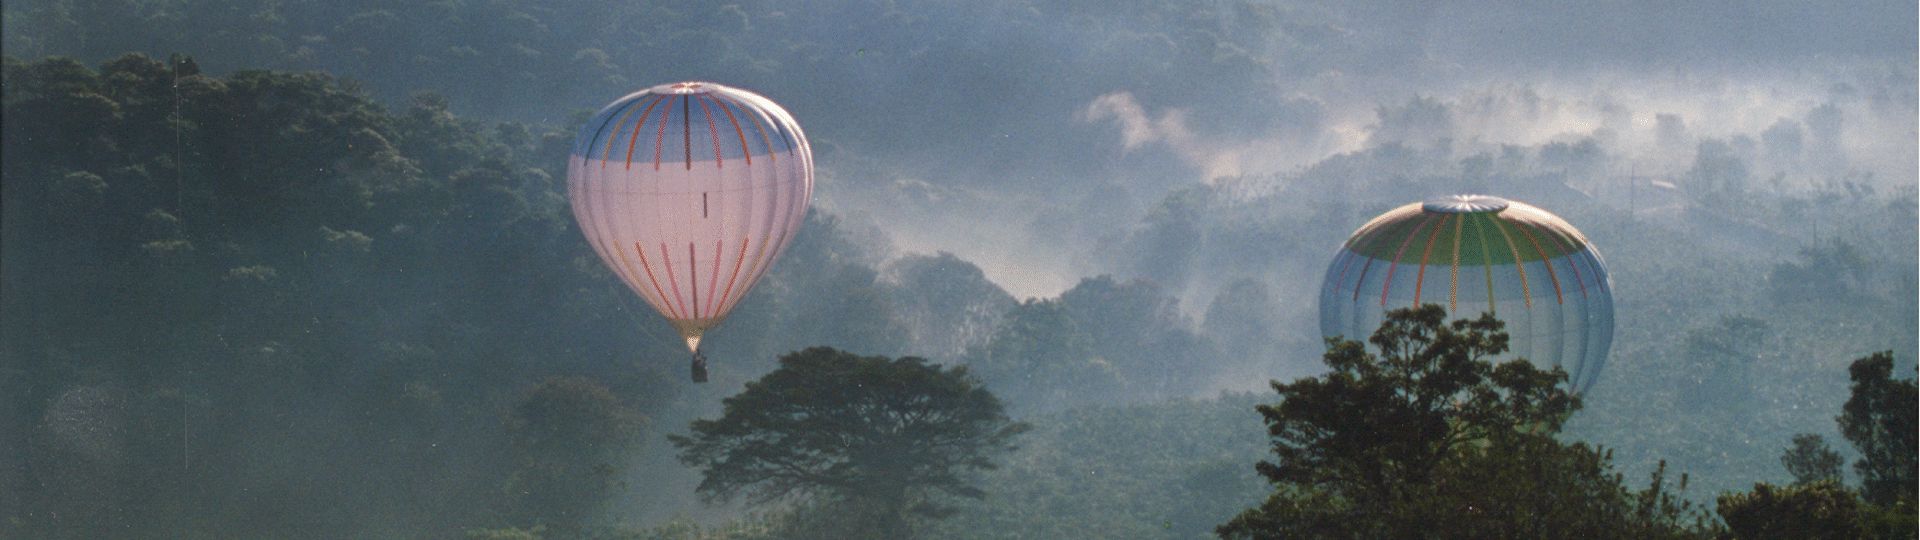 Costa Rica - Serendipity balloons over rainforest